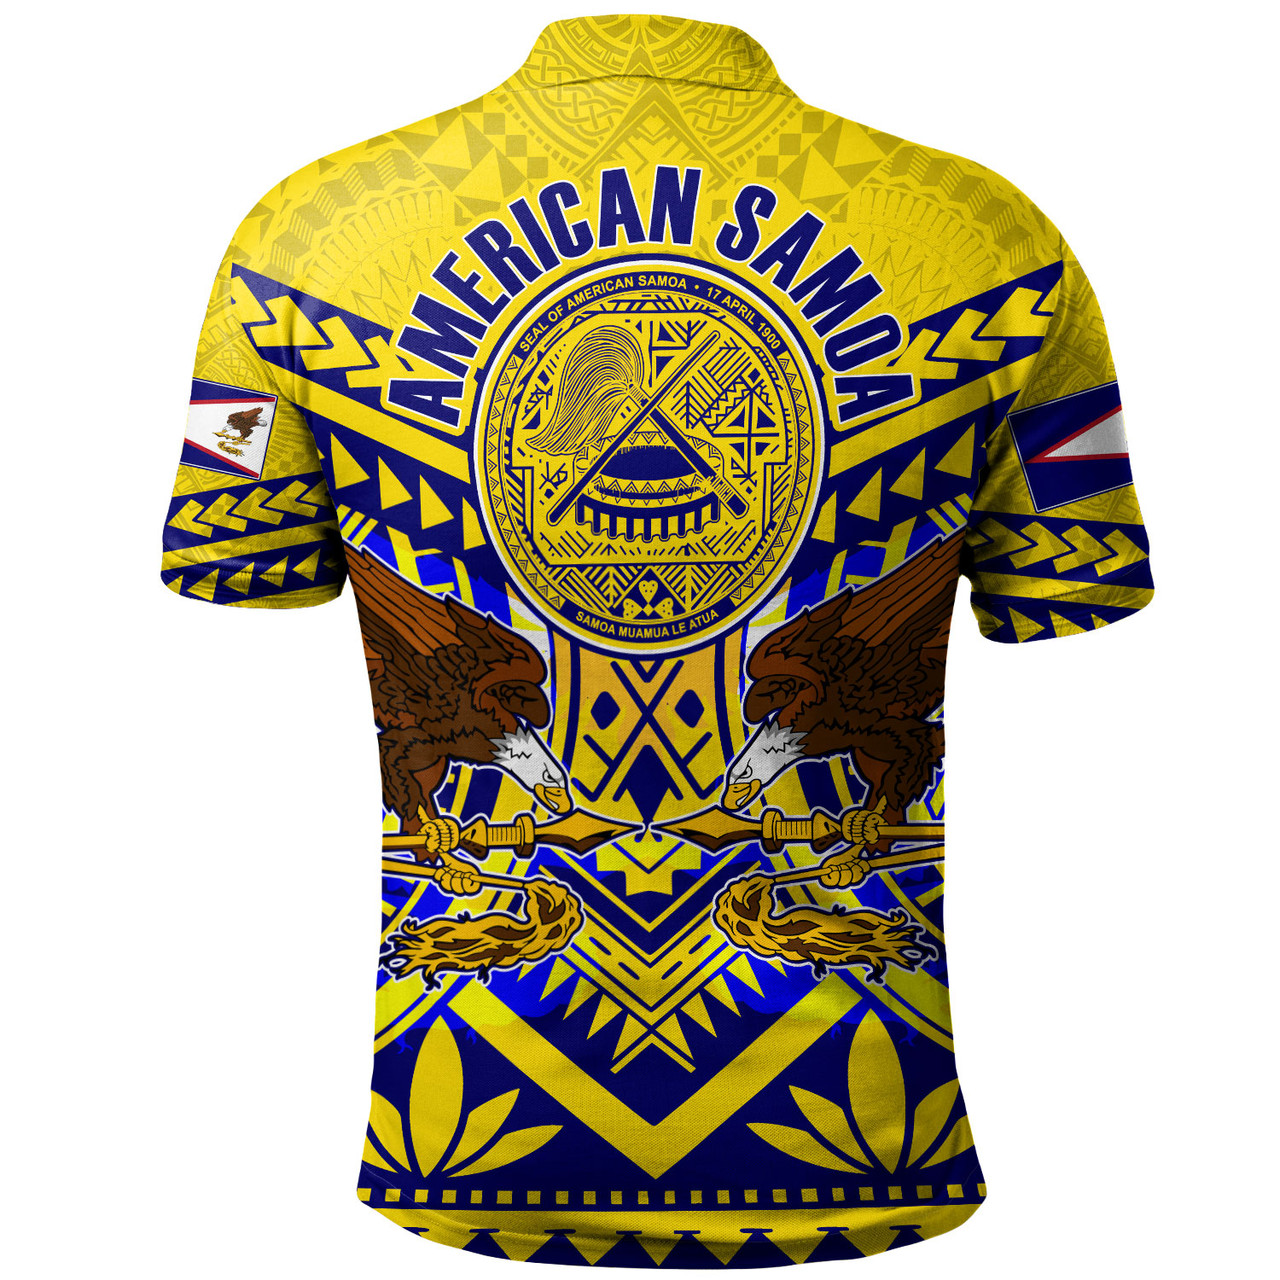 American Samoa Polo Shirt Custom American Samoa Seal And Eagle Polynesian Tattoo Yellow